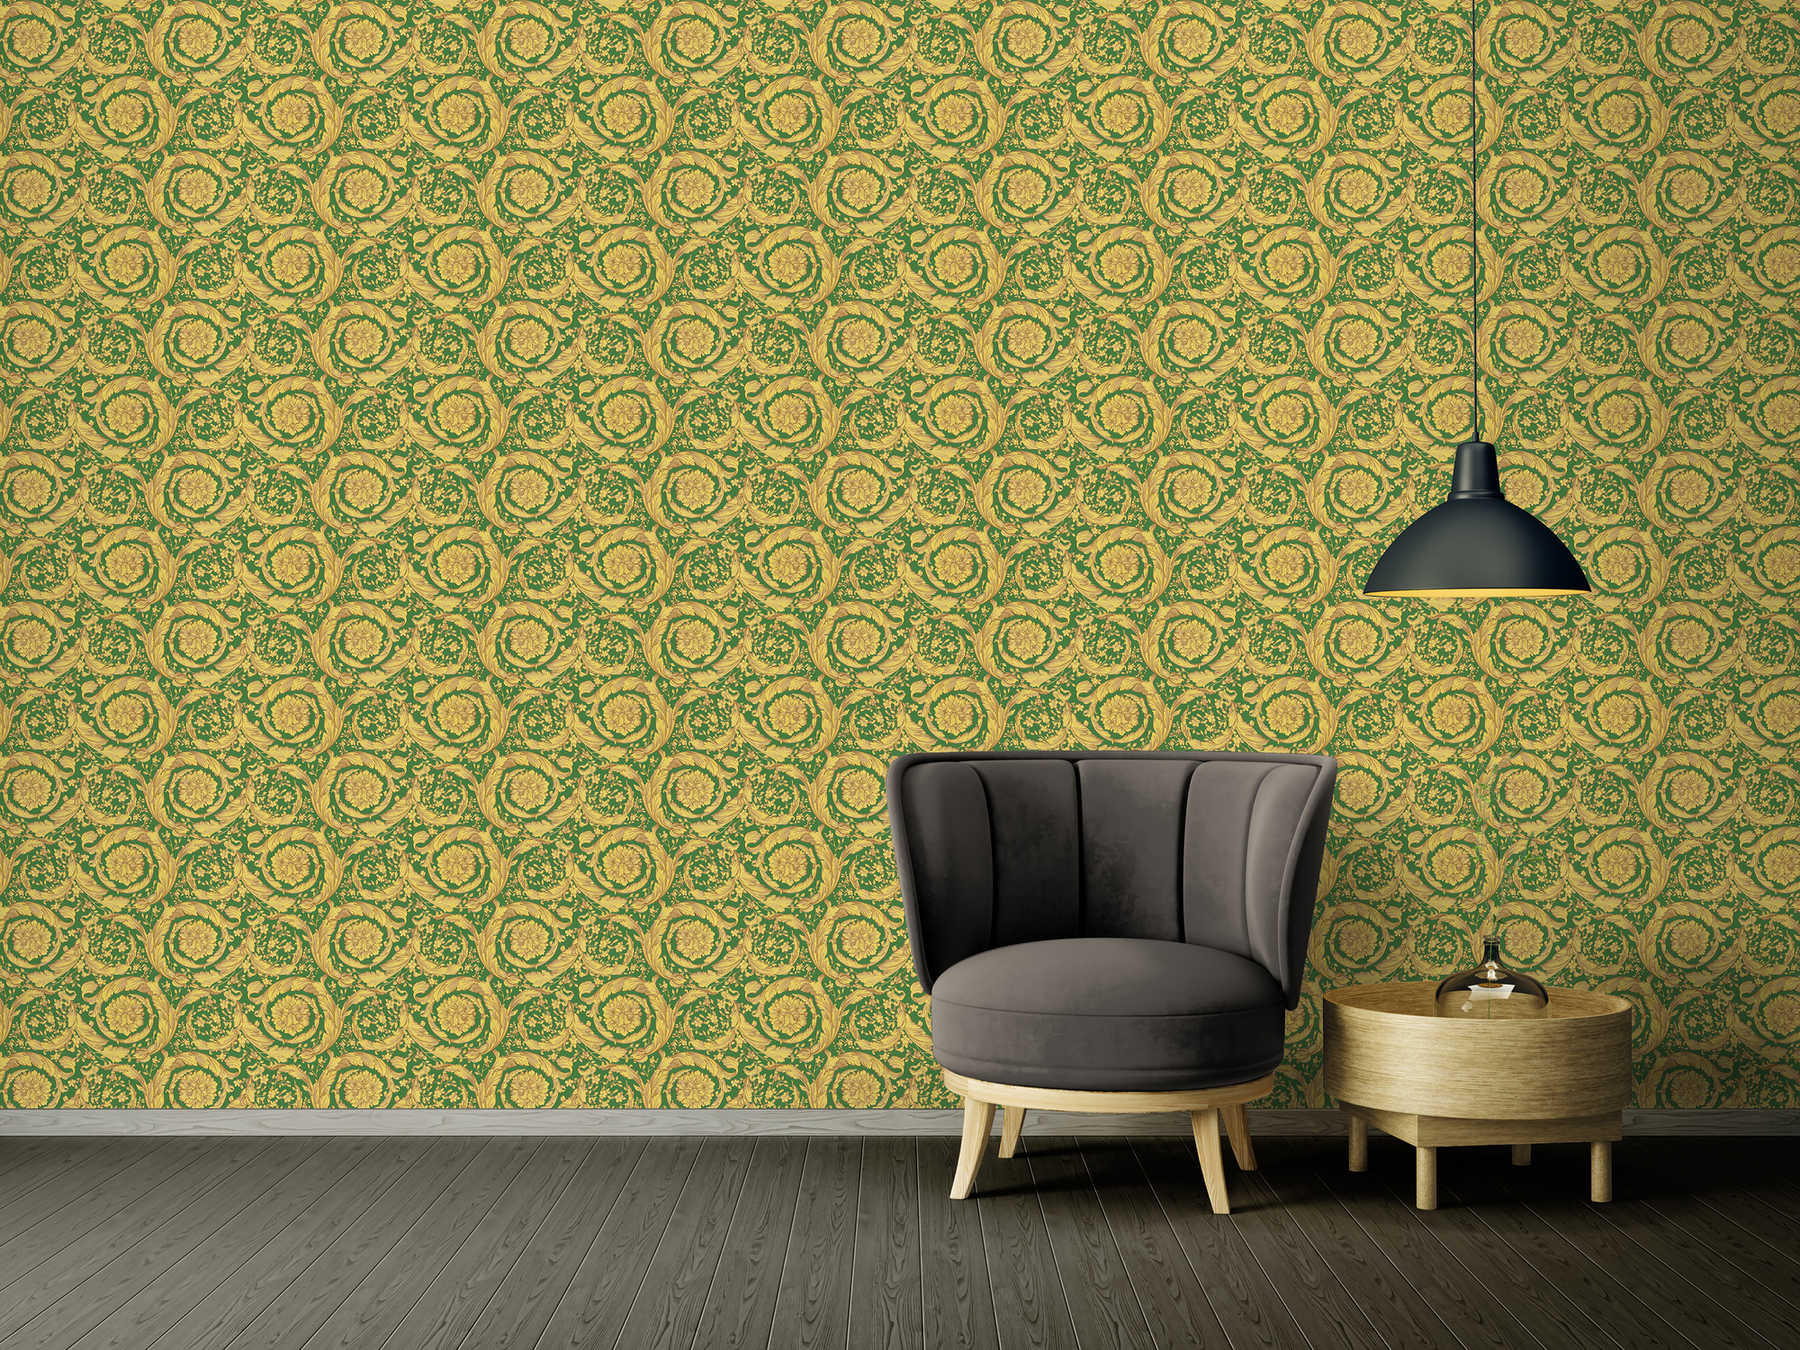             VERSACE wallpaper ornamental floral pattern - green, metallic, yellow
        